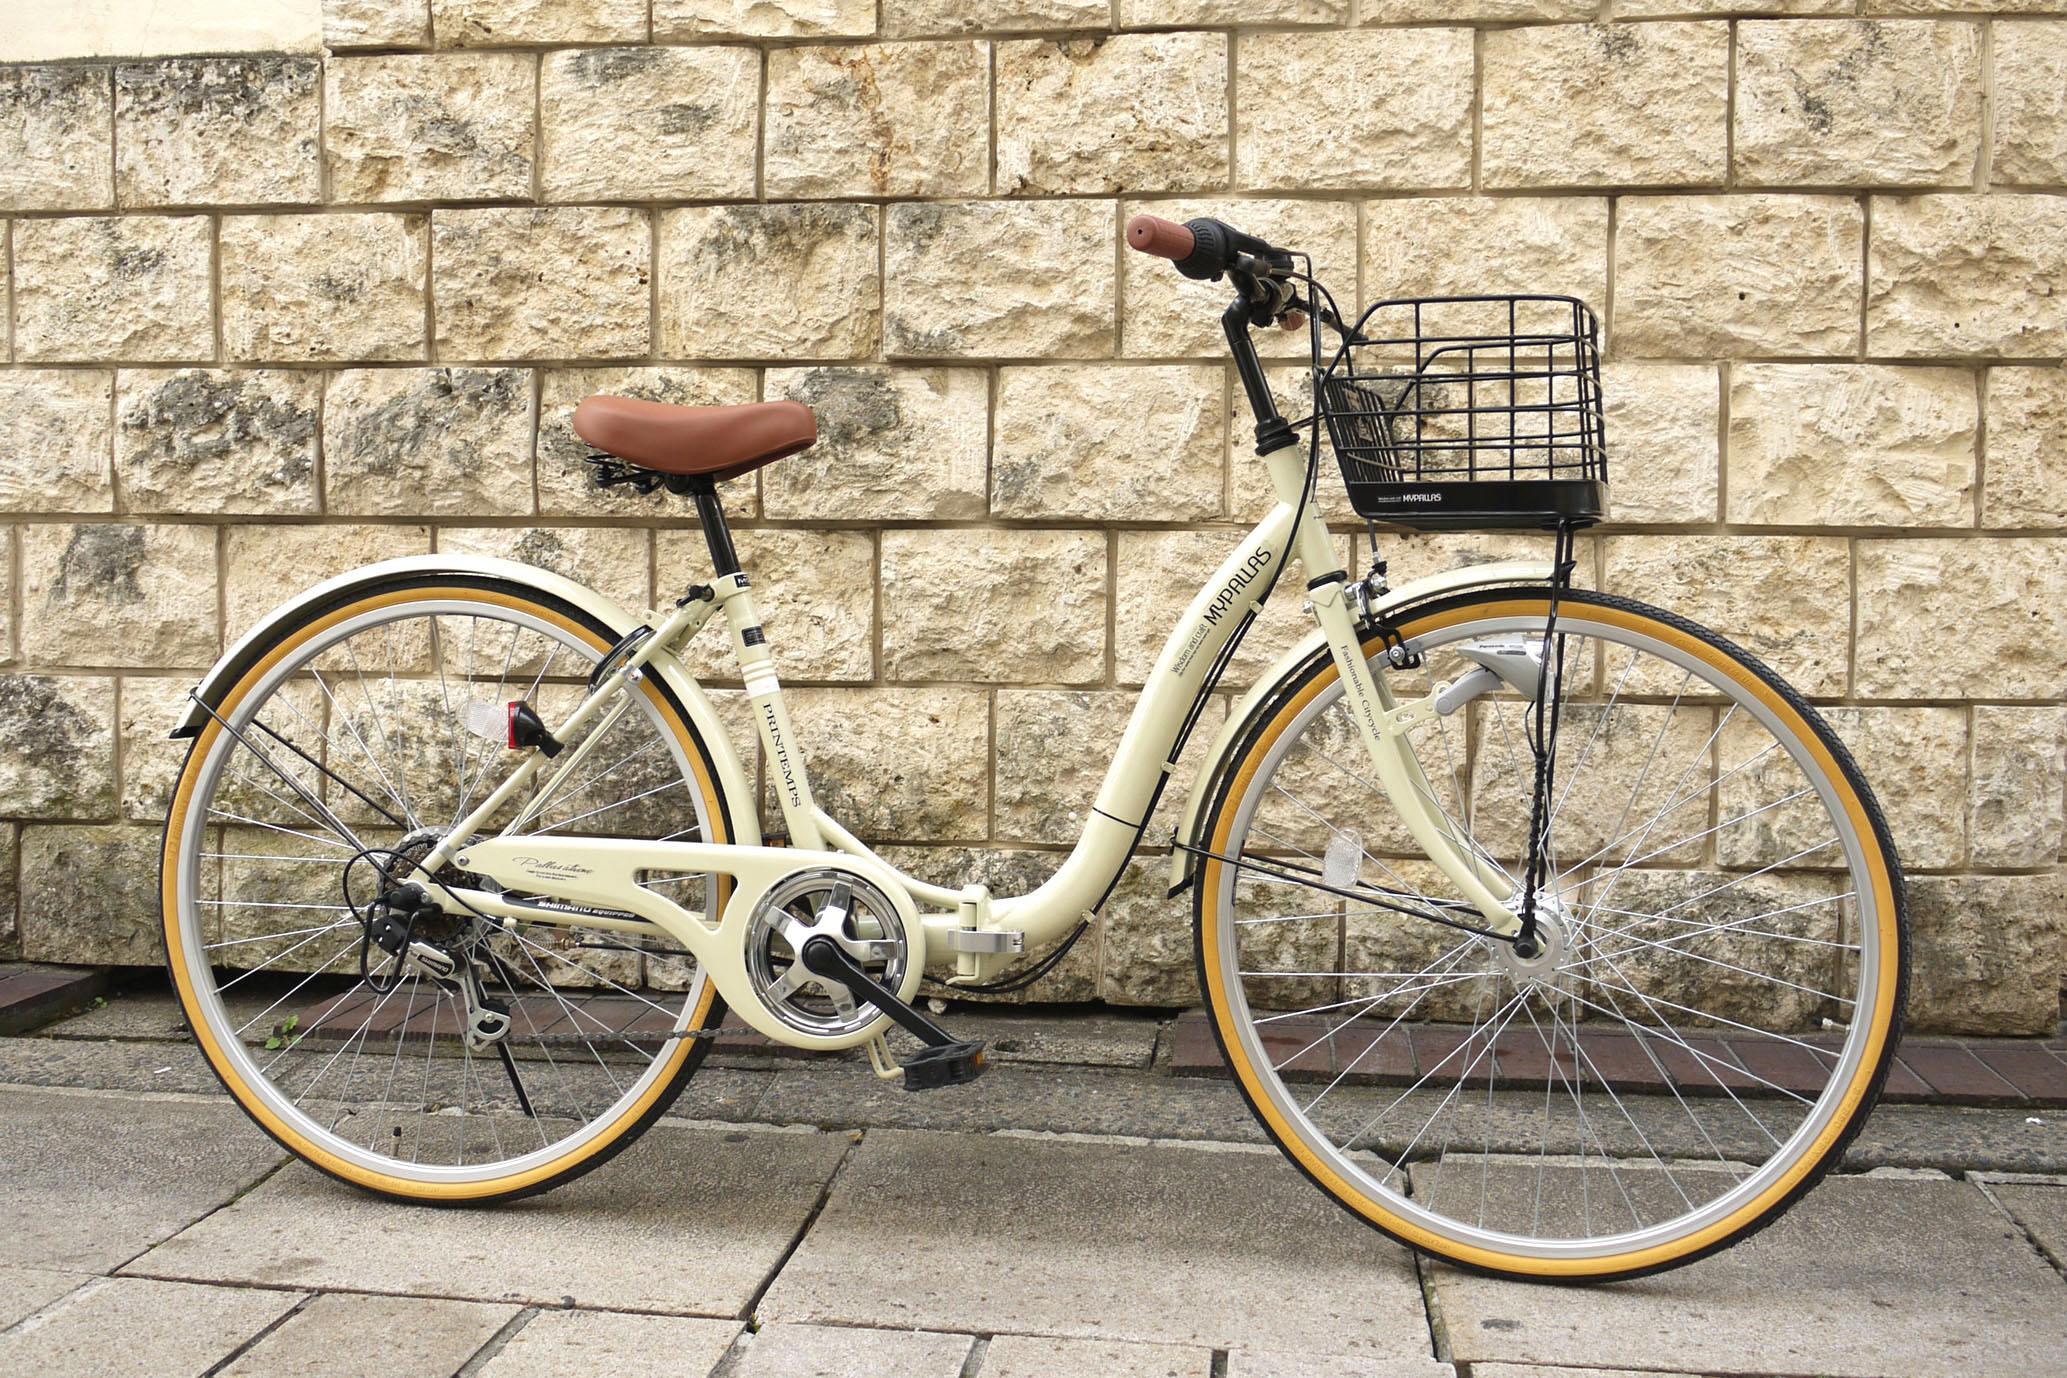 Xe đạp gấp Mypallas M509